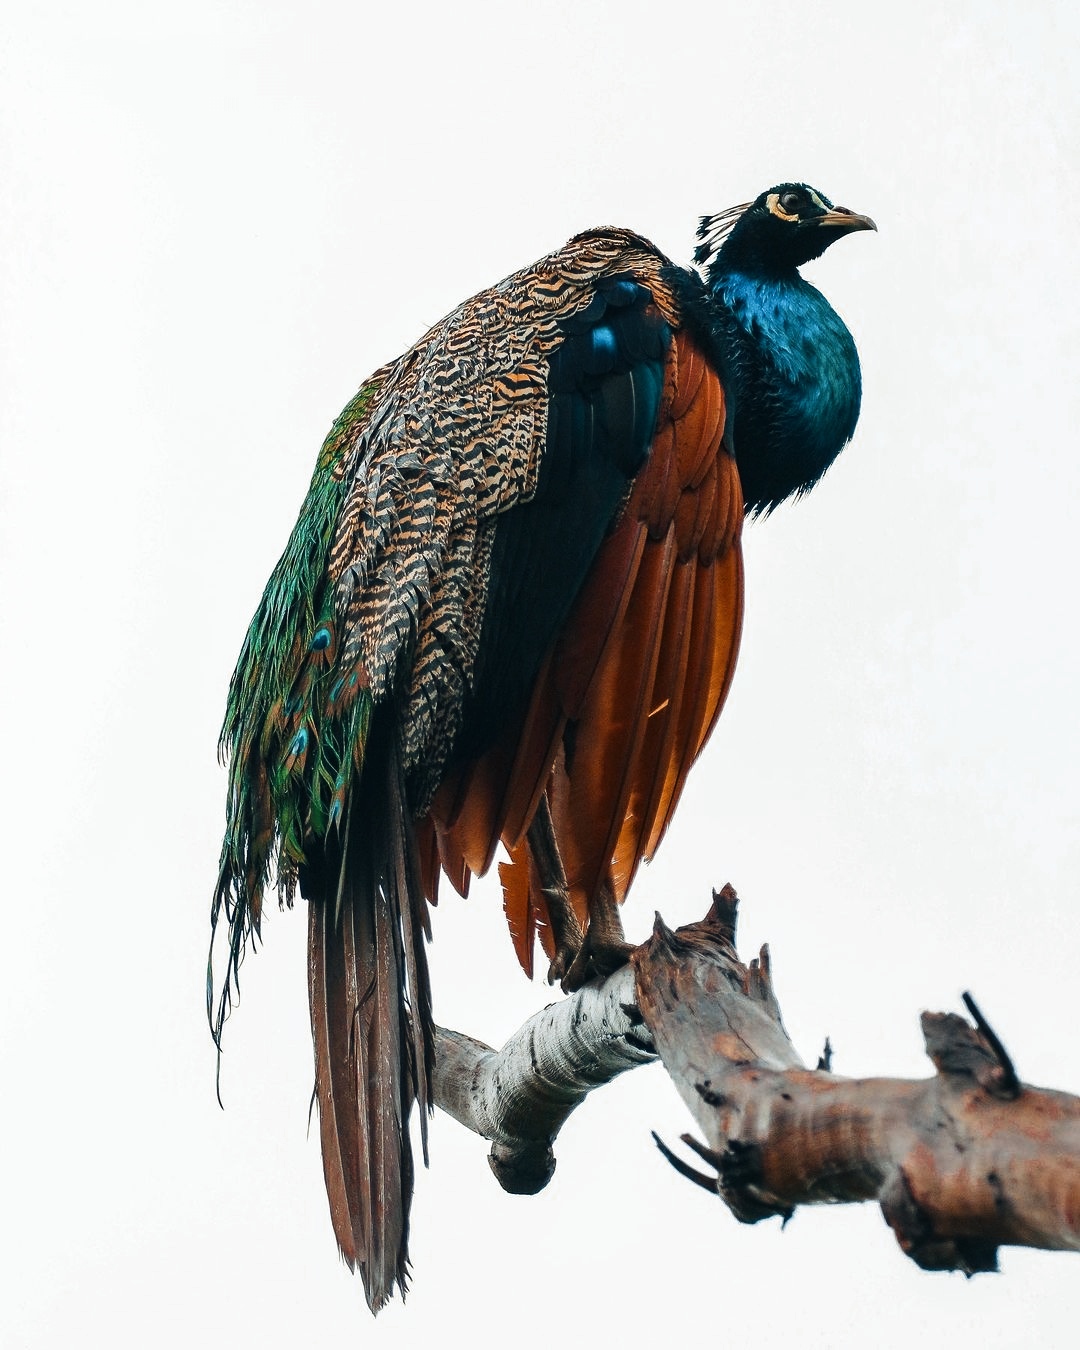 Real Peacock Photo